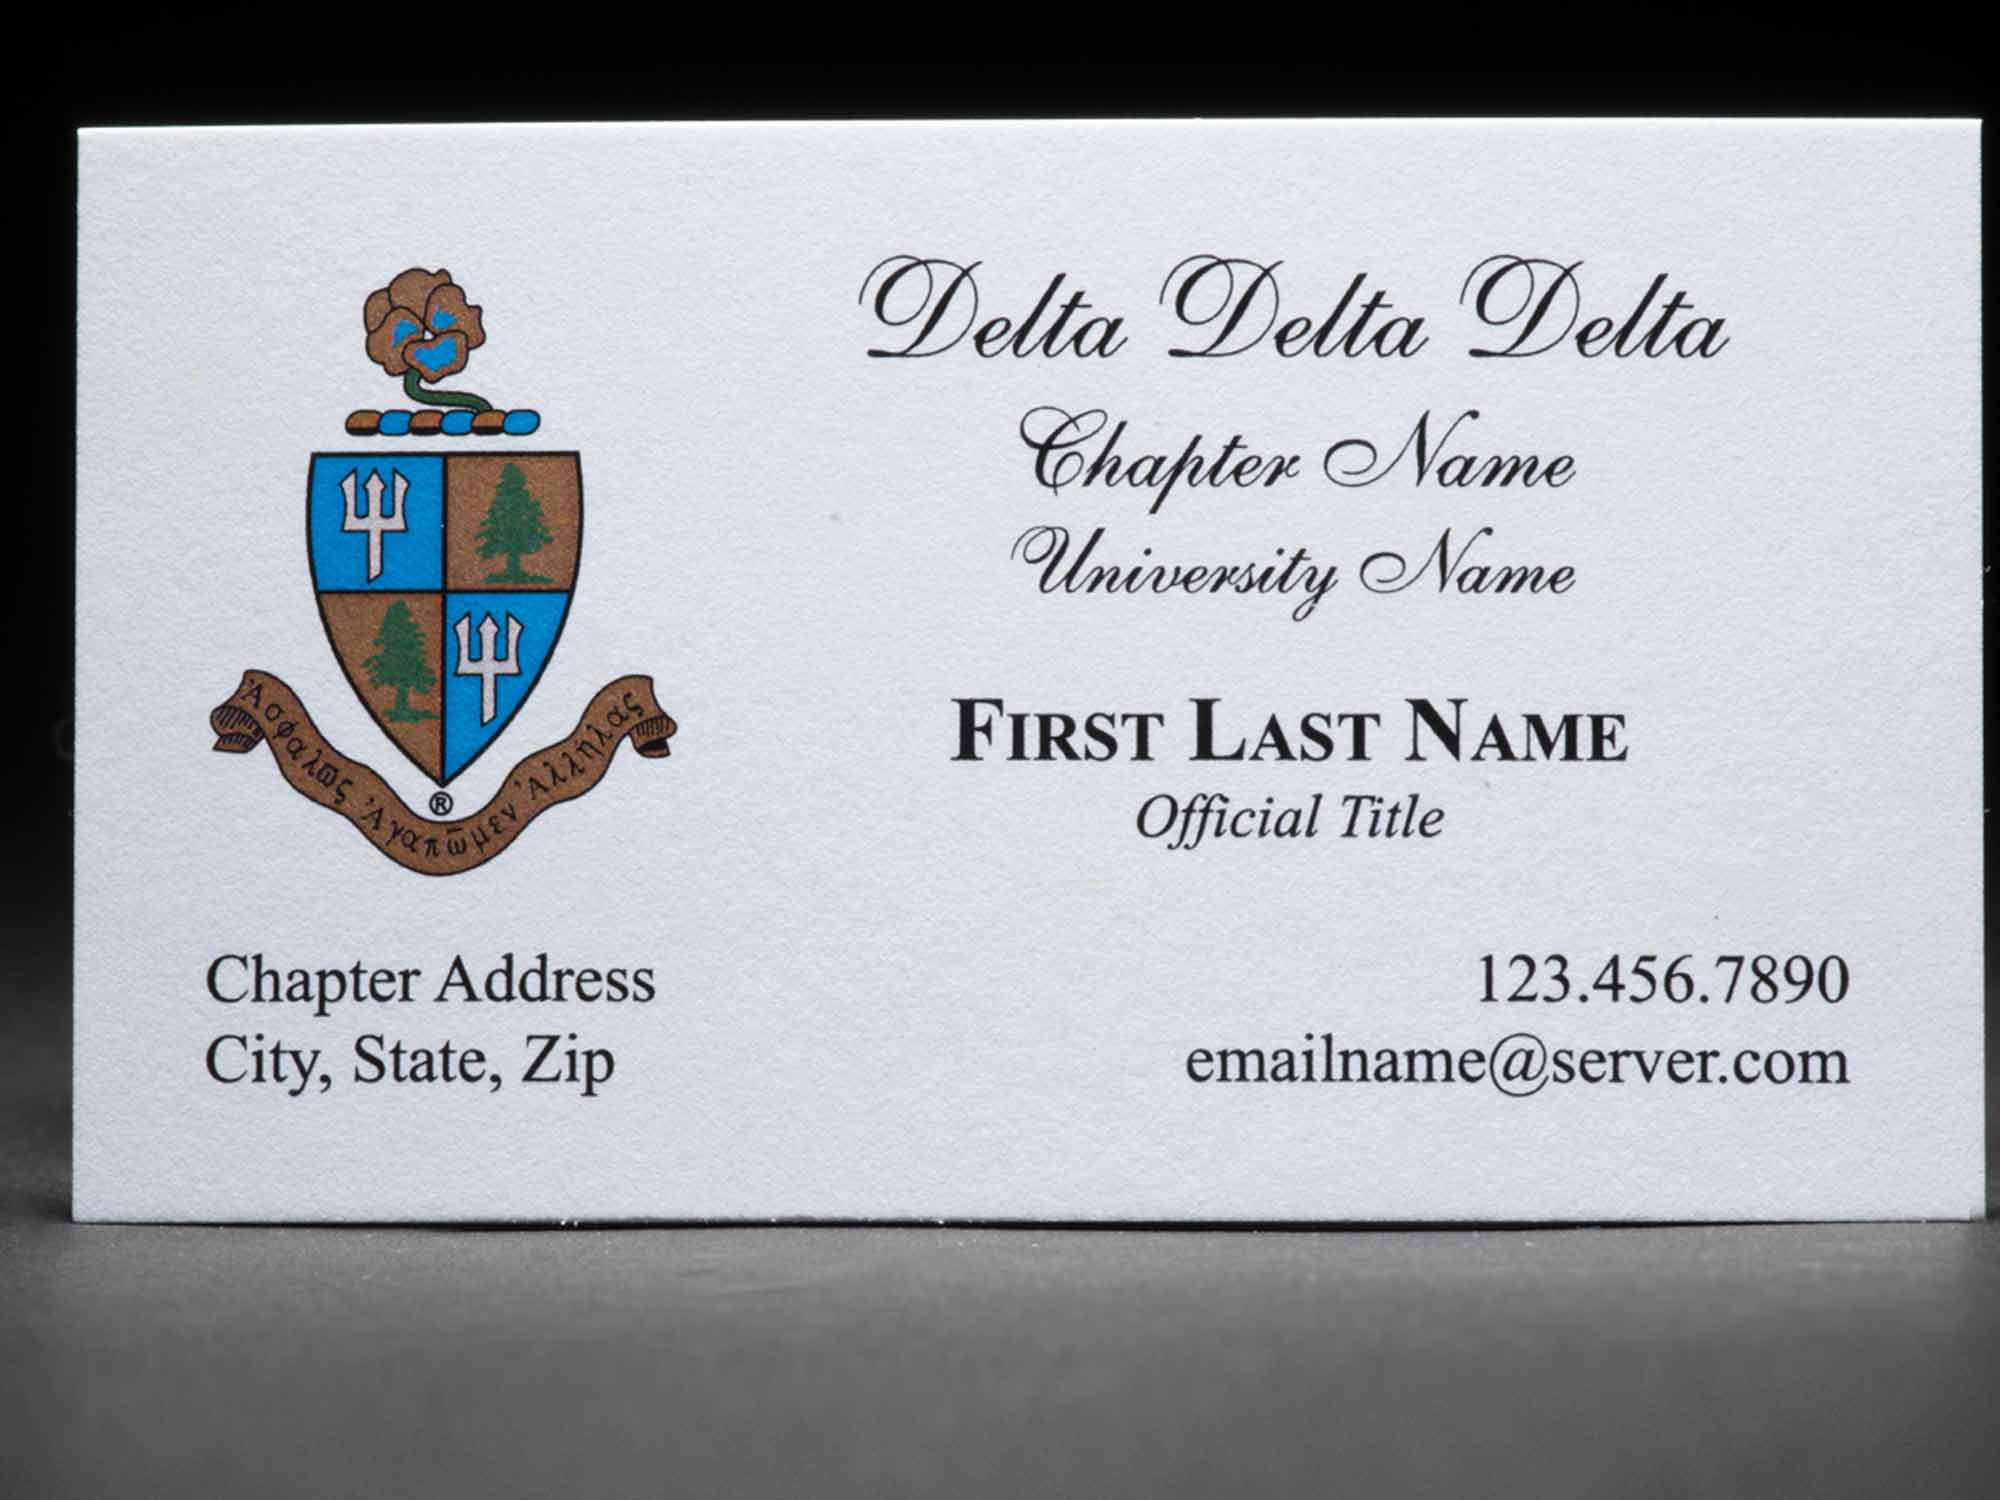 Business Cards Delta Delta Delta